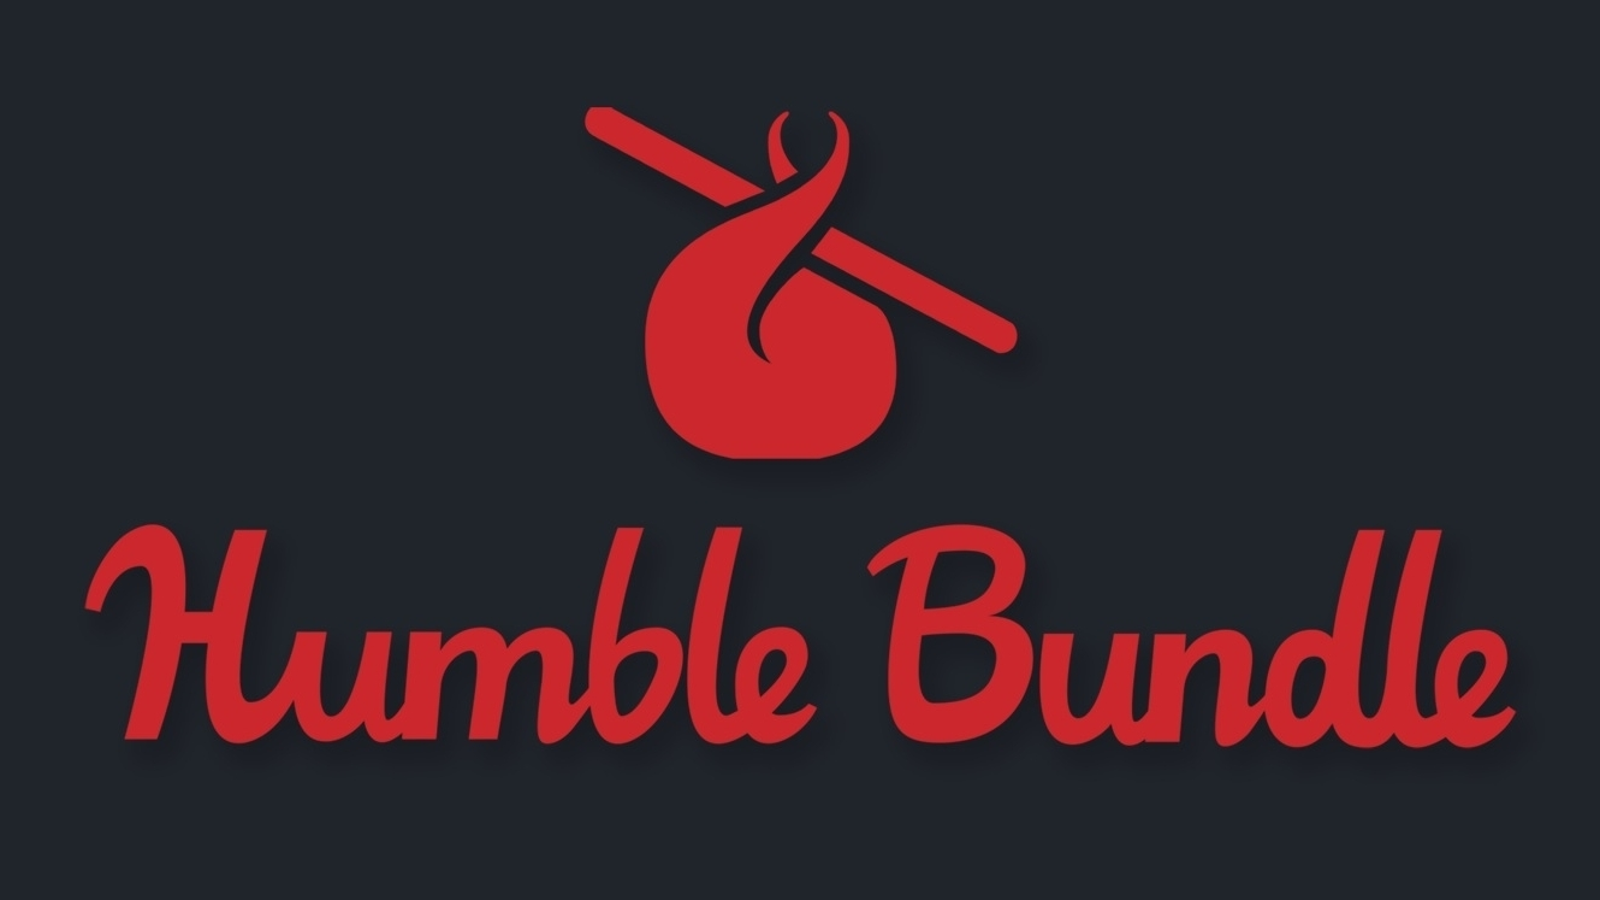 Humble Bundle are bringing back popular limited bundles throughout